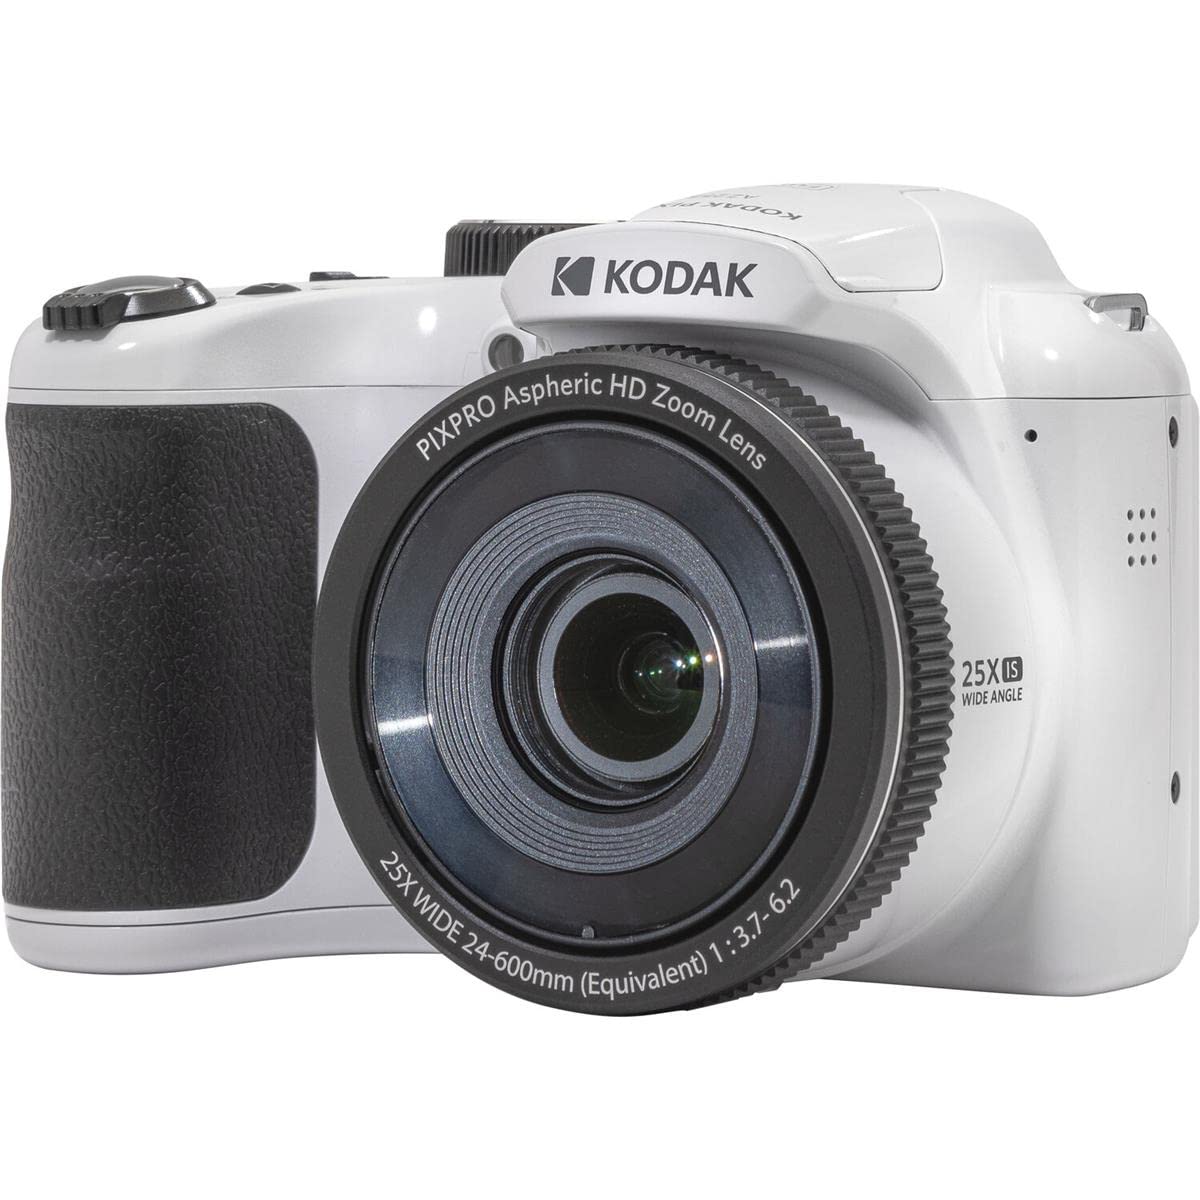 KODAK PIXPRO AZ255 16MP Digital Camera 25X Optical Zoom 24mm Wide Angle Lens Optical Image Stabilization 1080P Full HD Video 3